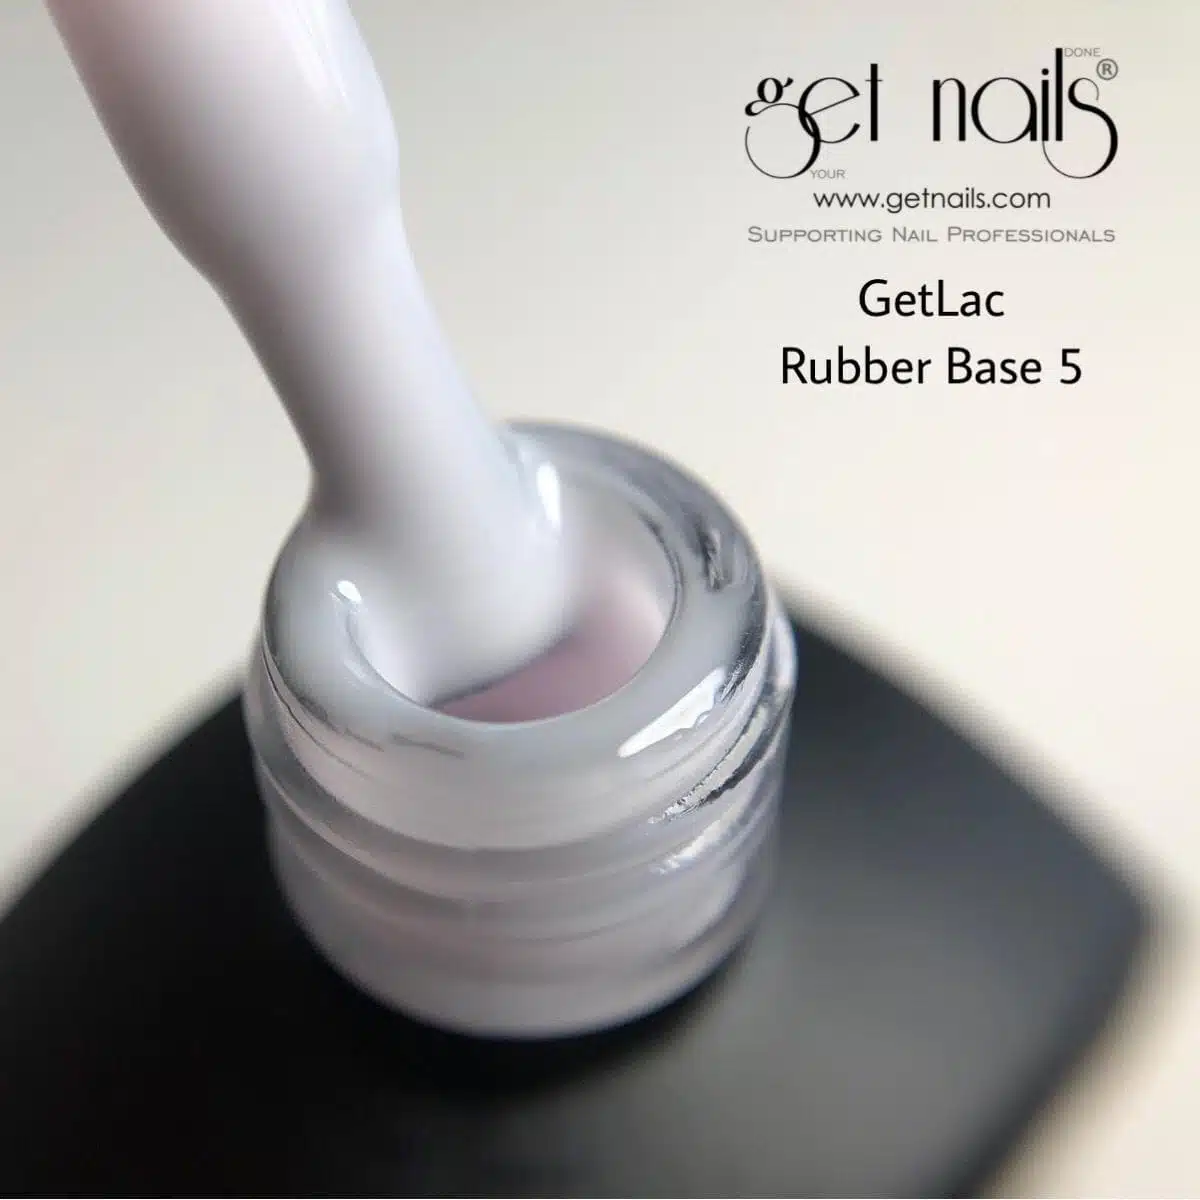 Get Nails Austria - GetLac Rubber Base 5 15g